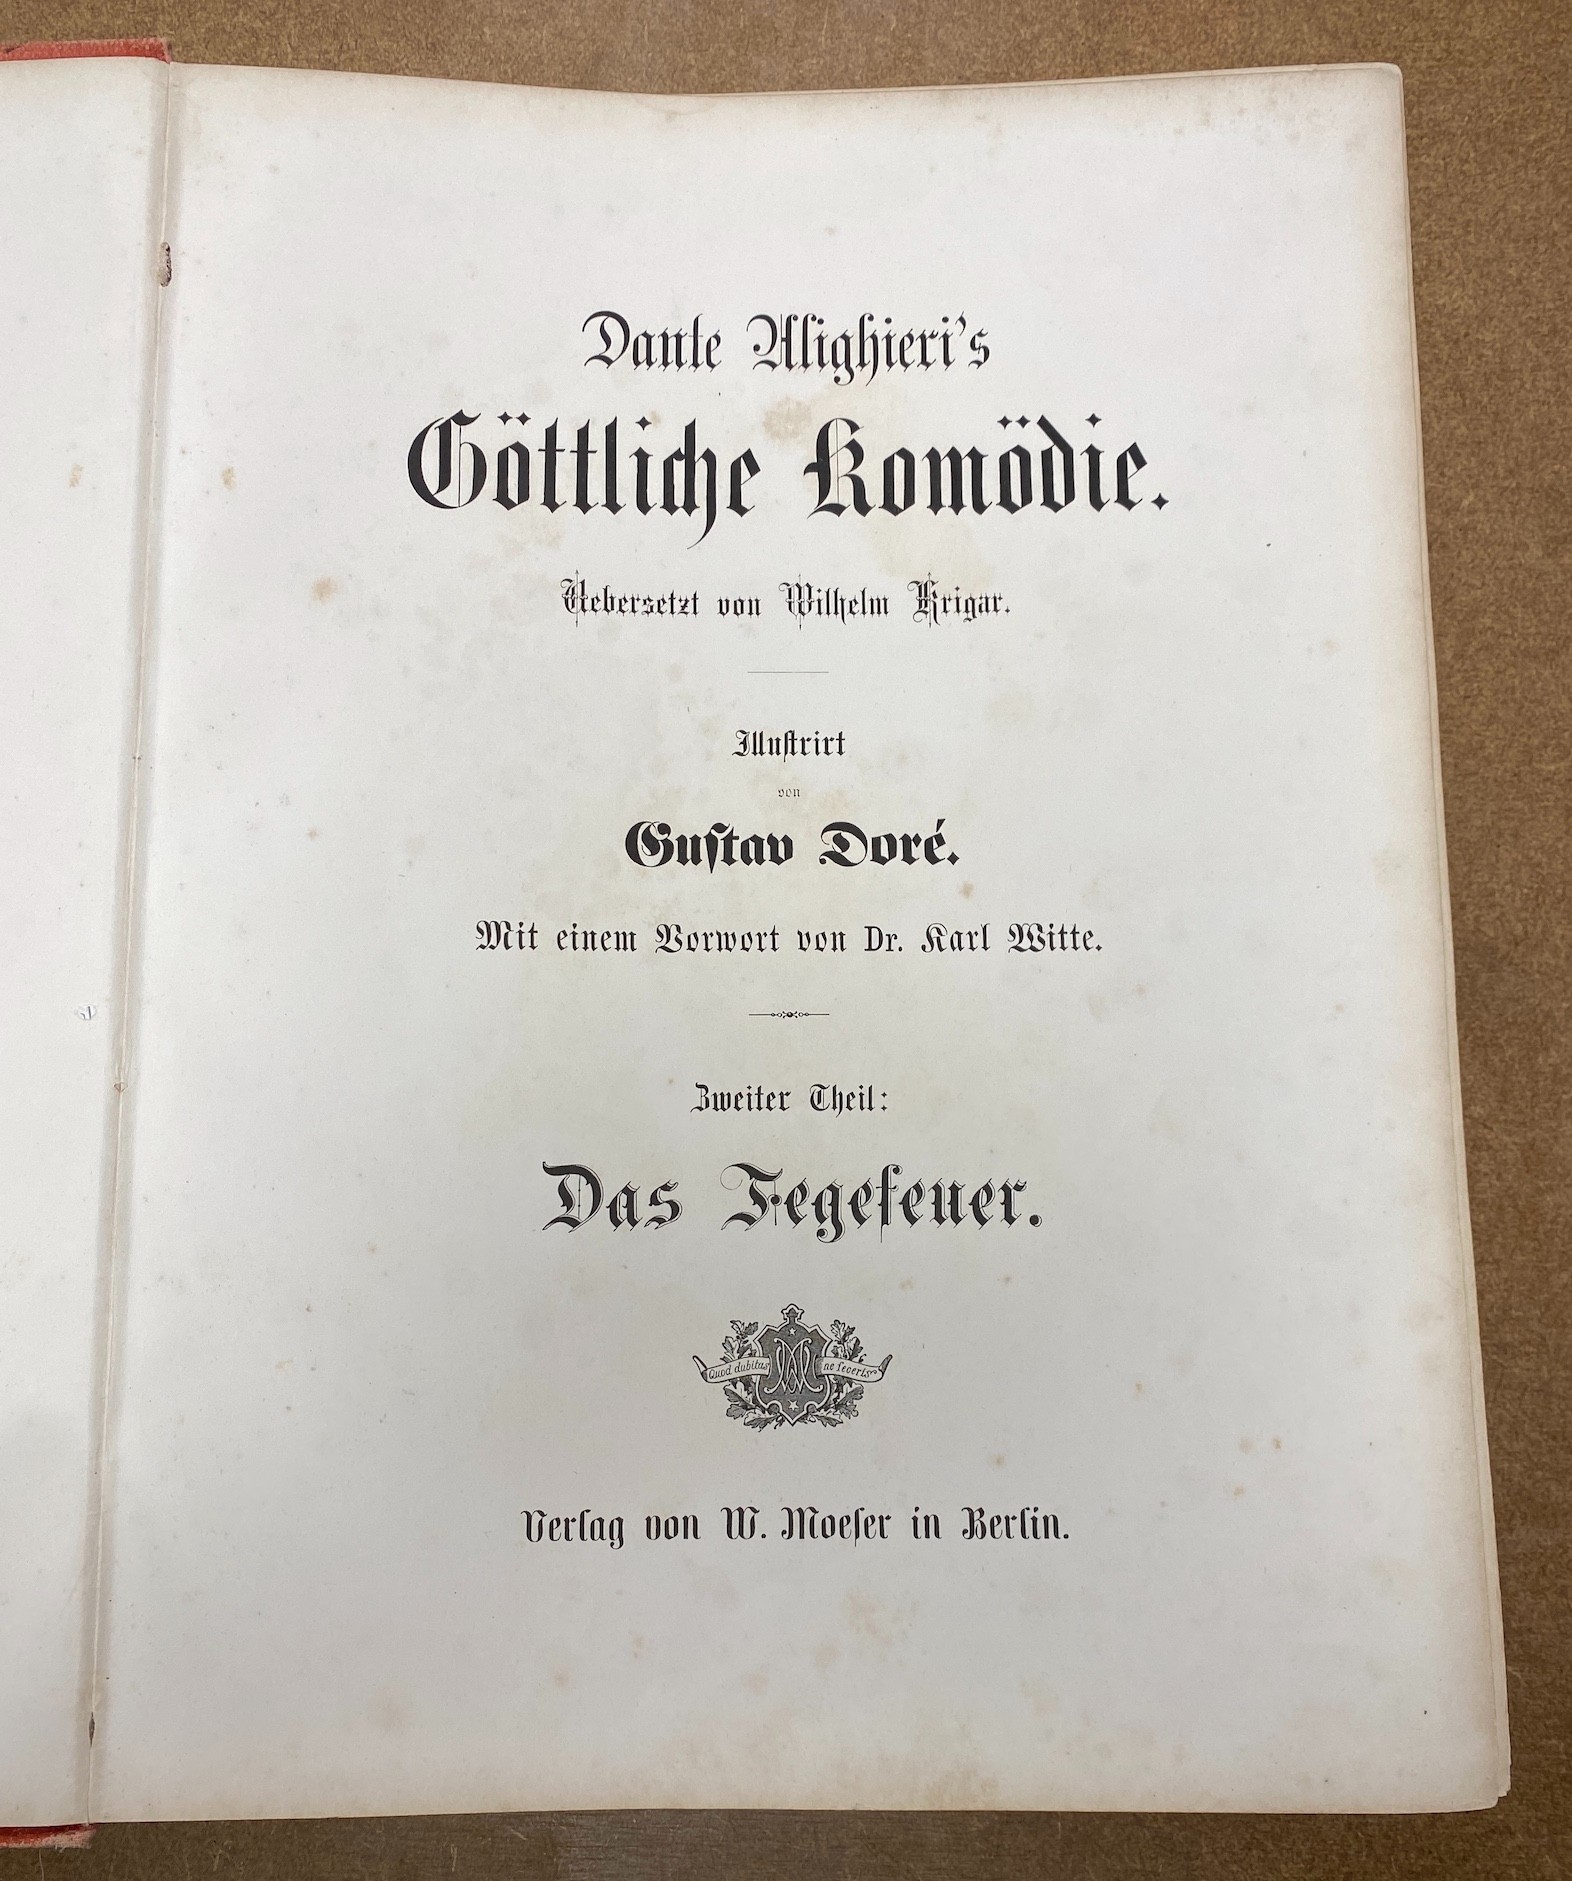 Alighieri, Dante, Göttliche Komödie (The Divine Comedy), two volumes